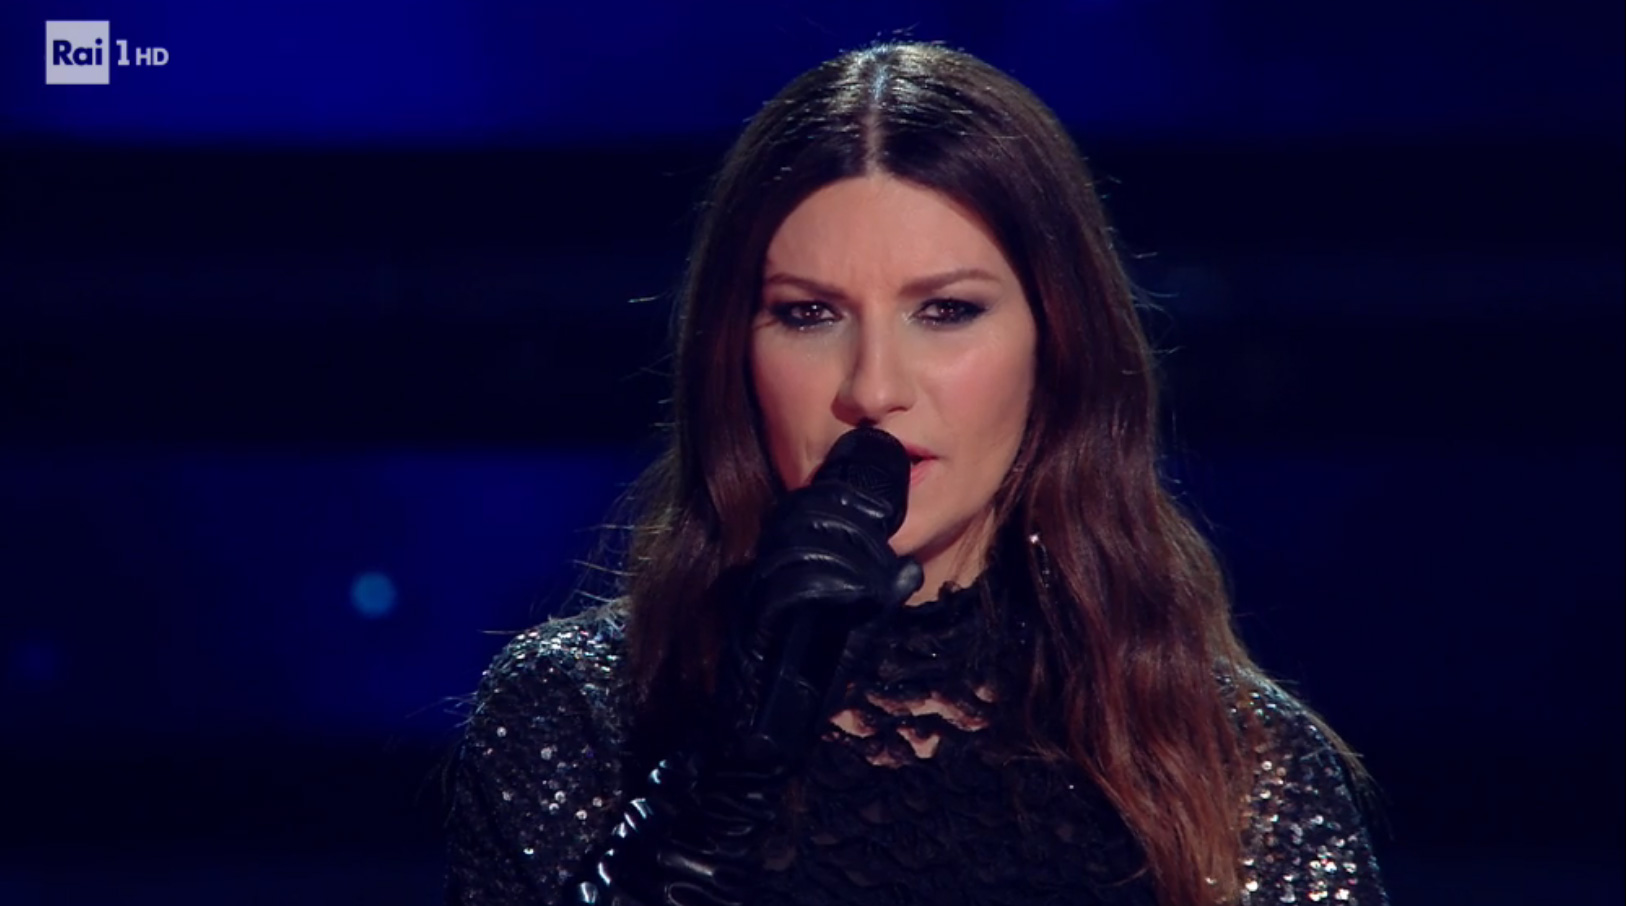 Sanremo 2021 2a serata: Laura Pausini mentre canta 'Io si' [credit: RaiPlay]